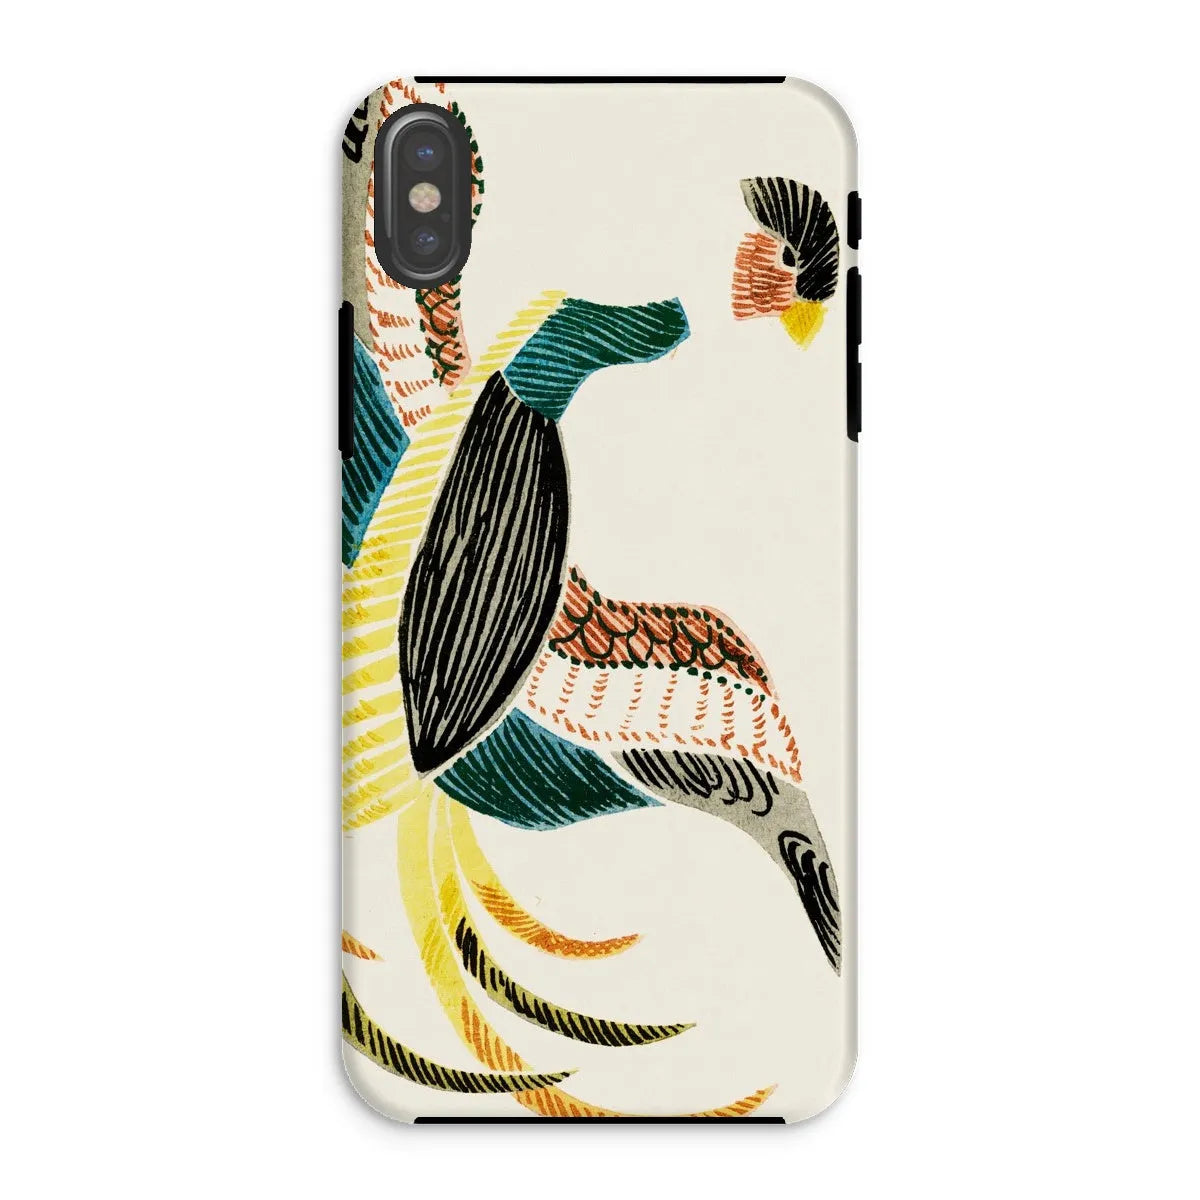 Woodblock Crane - Japanese Bird Phone Case - Taguchi Tomoki - Iphone Xs / Matte - Mobile Phone Cases - Aesthetic Art